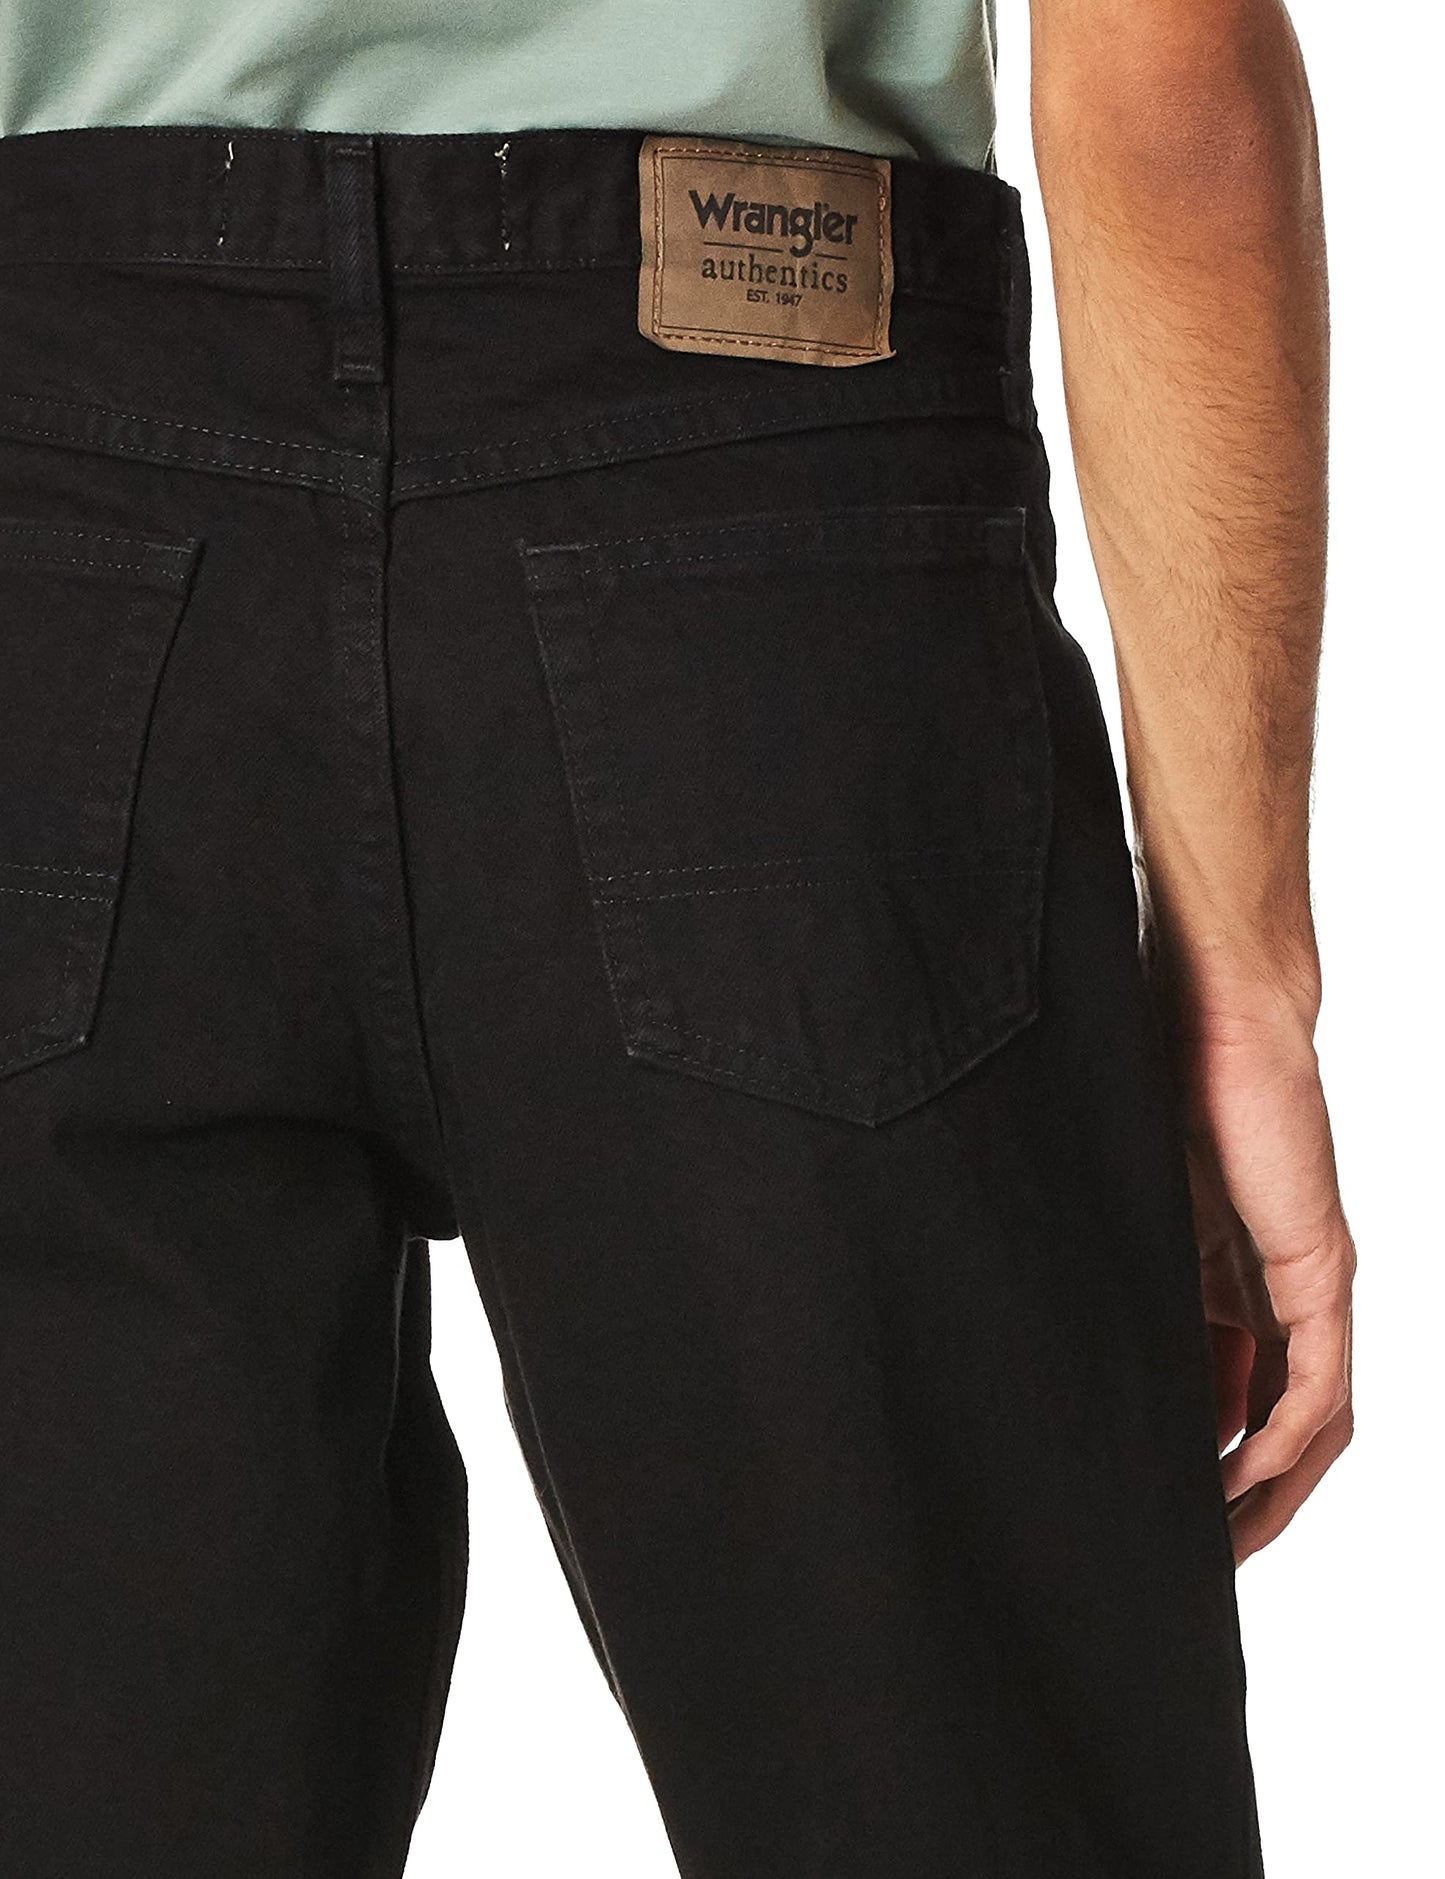 Wrangler Authentics Men's Big & Tall Classic 5-Pocket Relaxed Fit Cotton Jean, Black, 48W x 32L